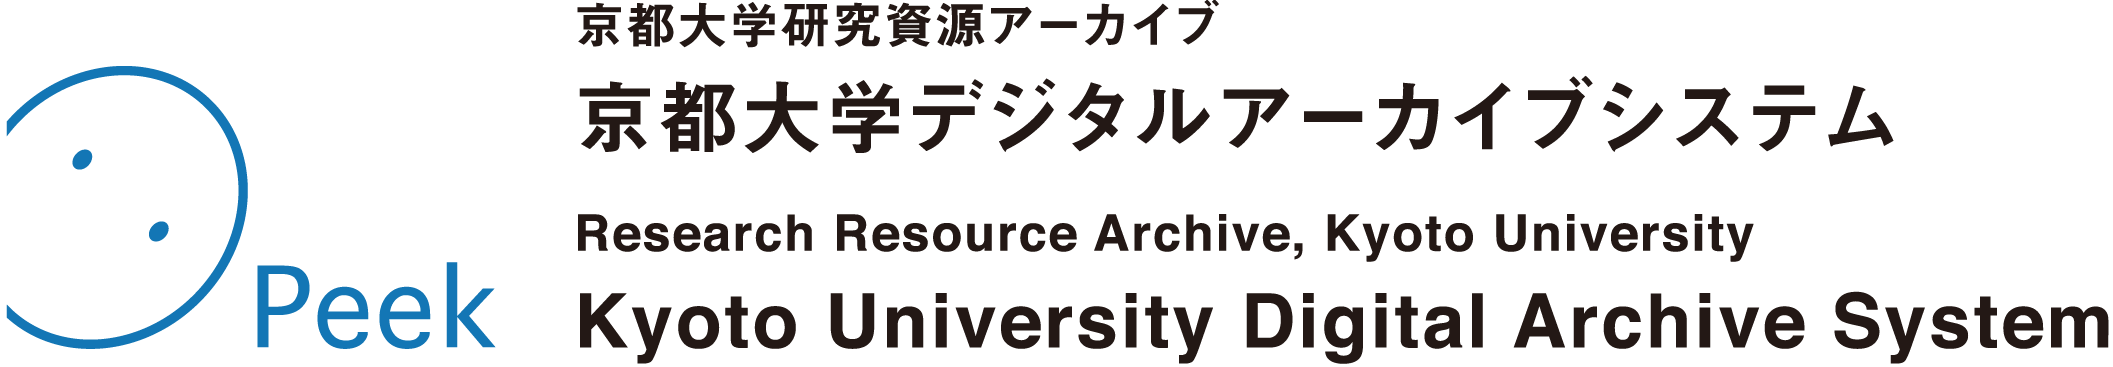 Peek, Kyoto University Digital Archive System